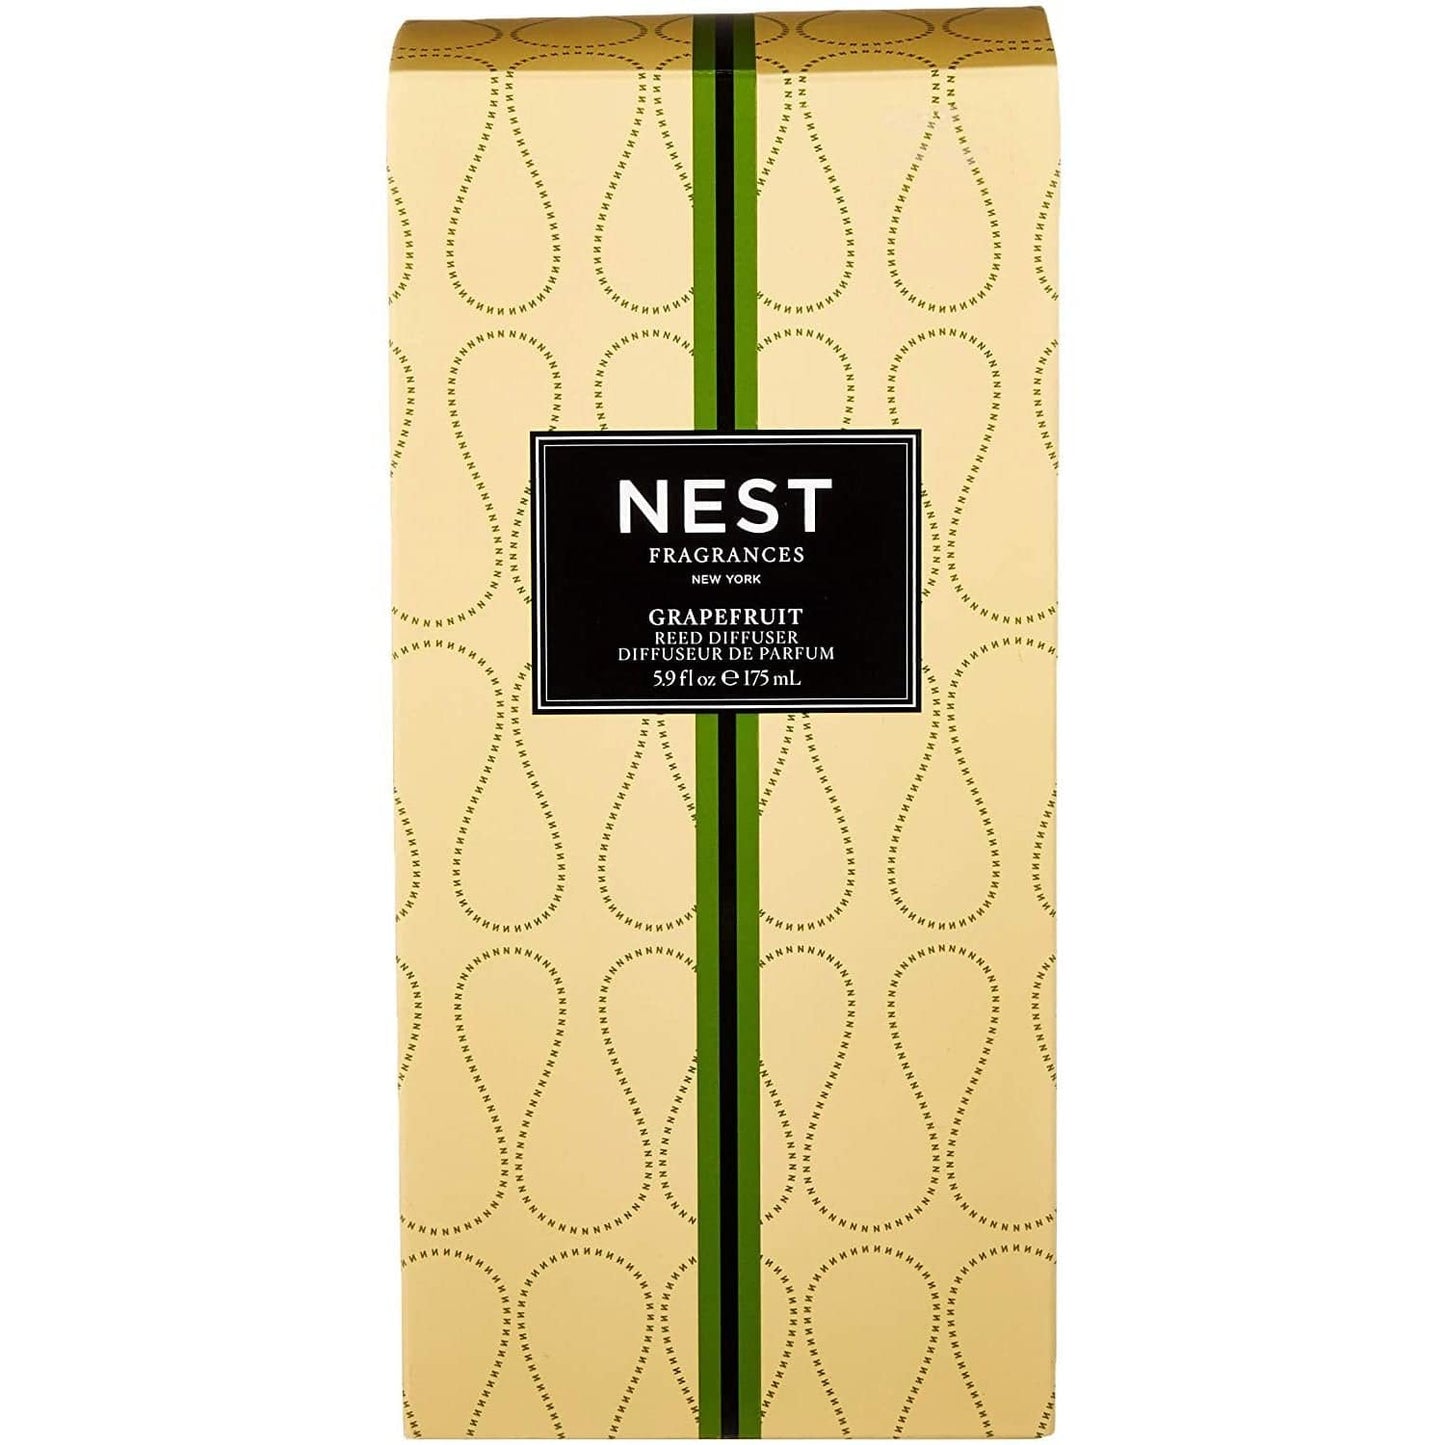 NEST - Grapefruit Reed Diffuser - Findlay Rowe Designs